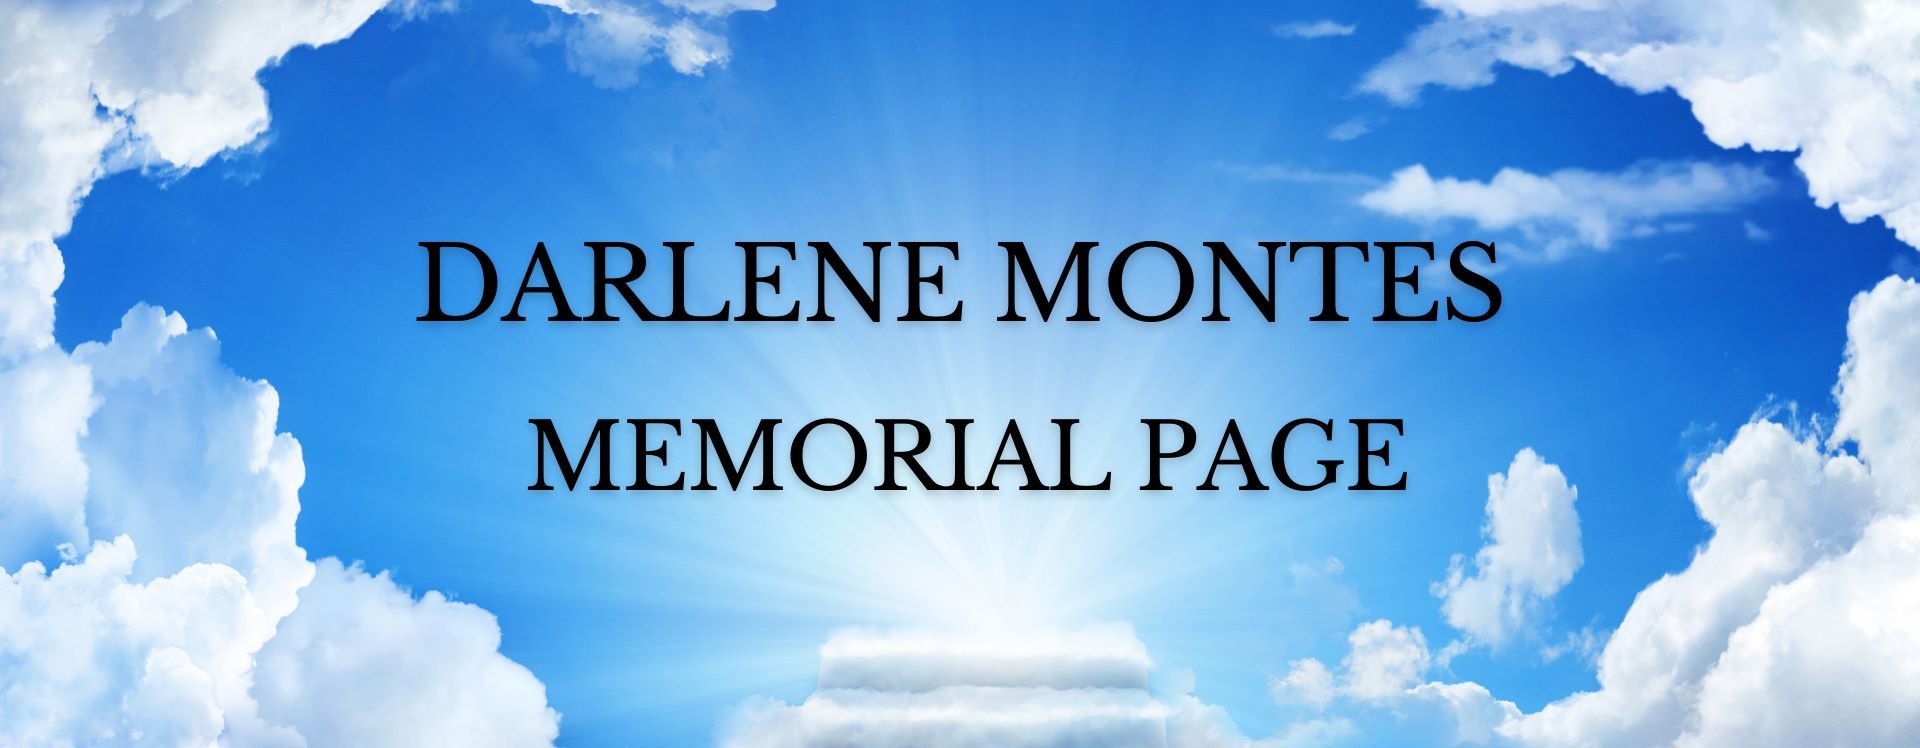 Darlene Montes Memorial Page